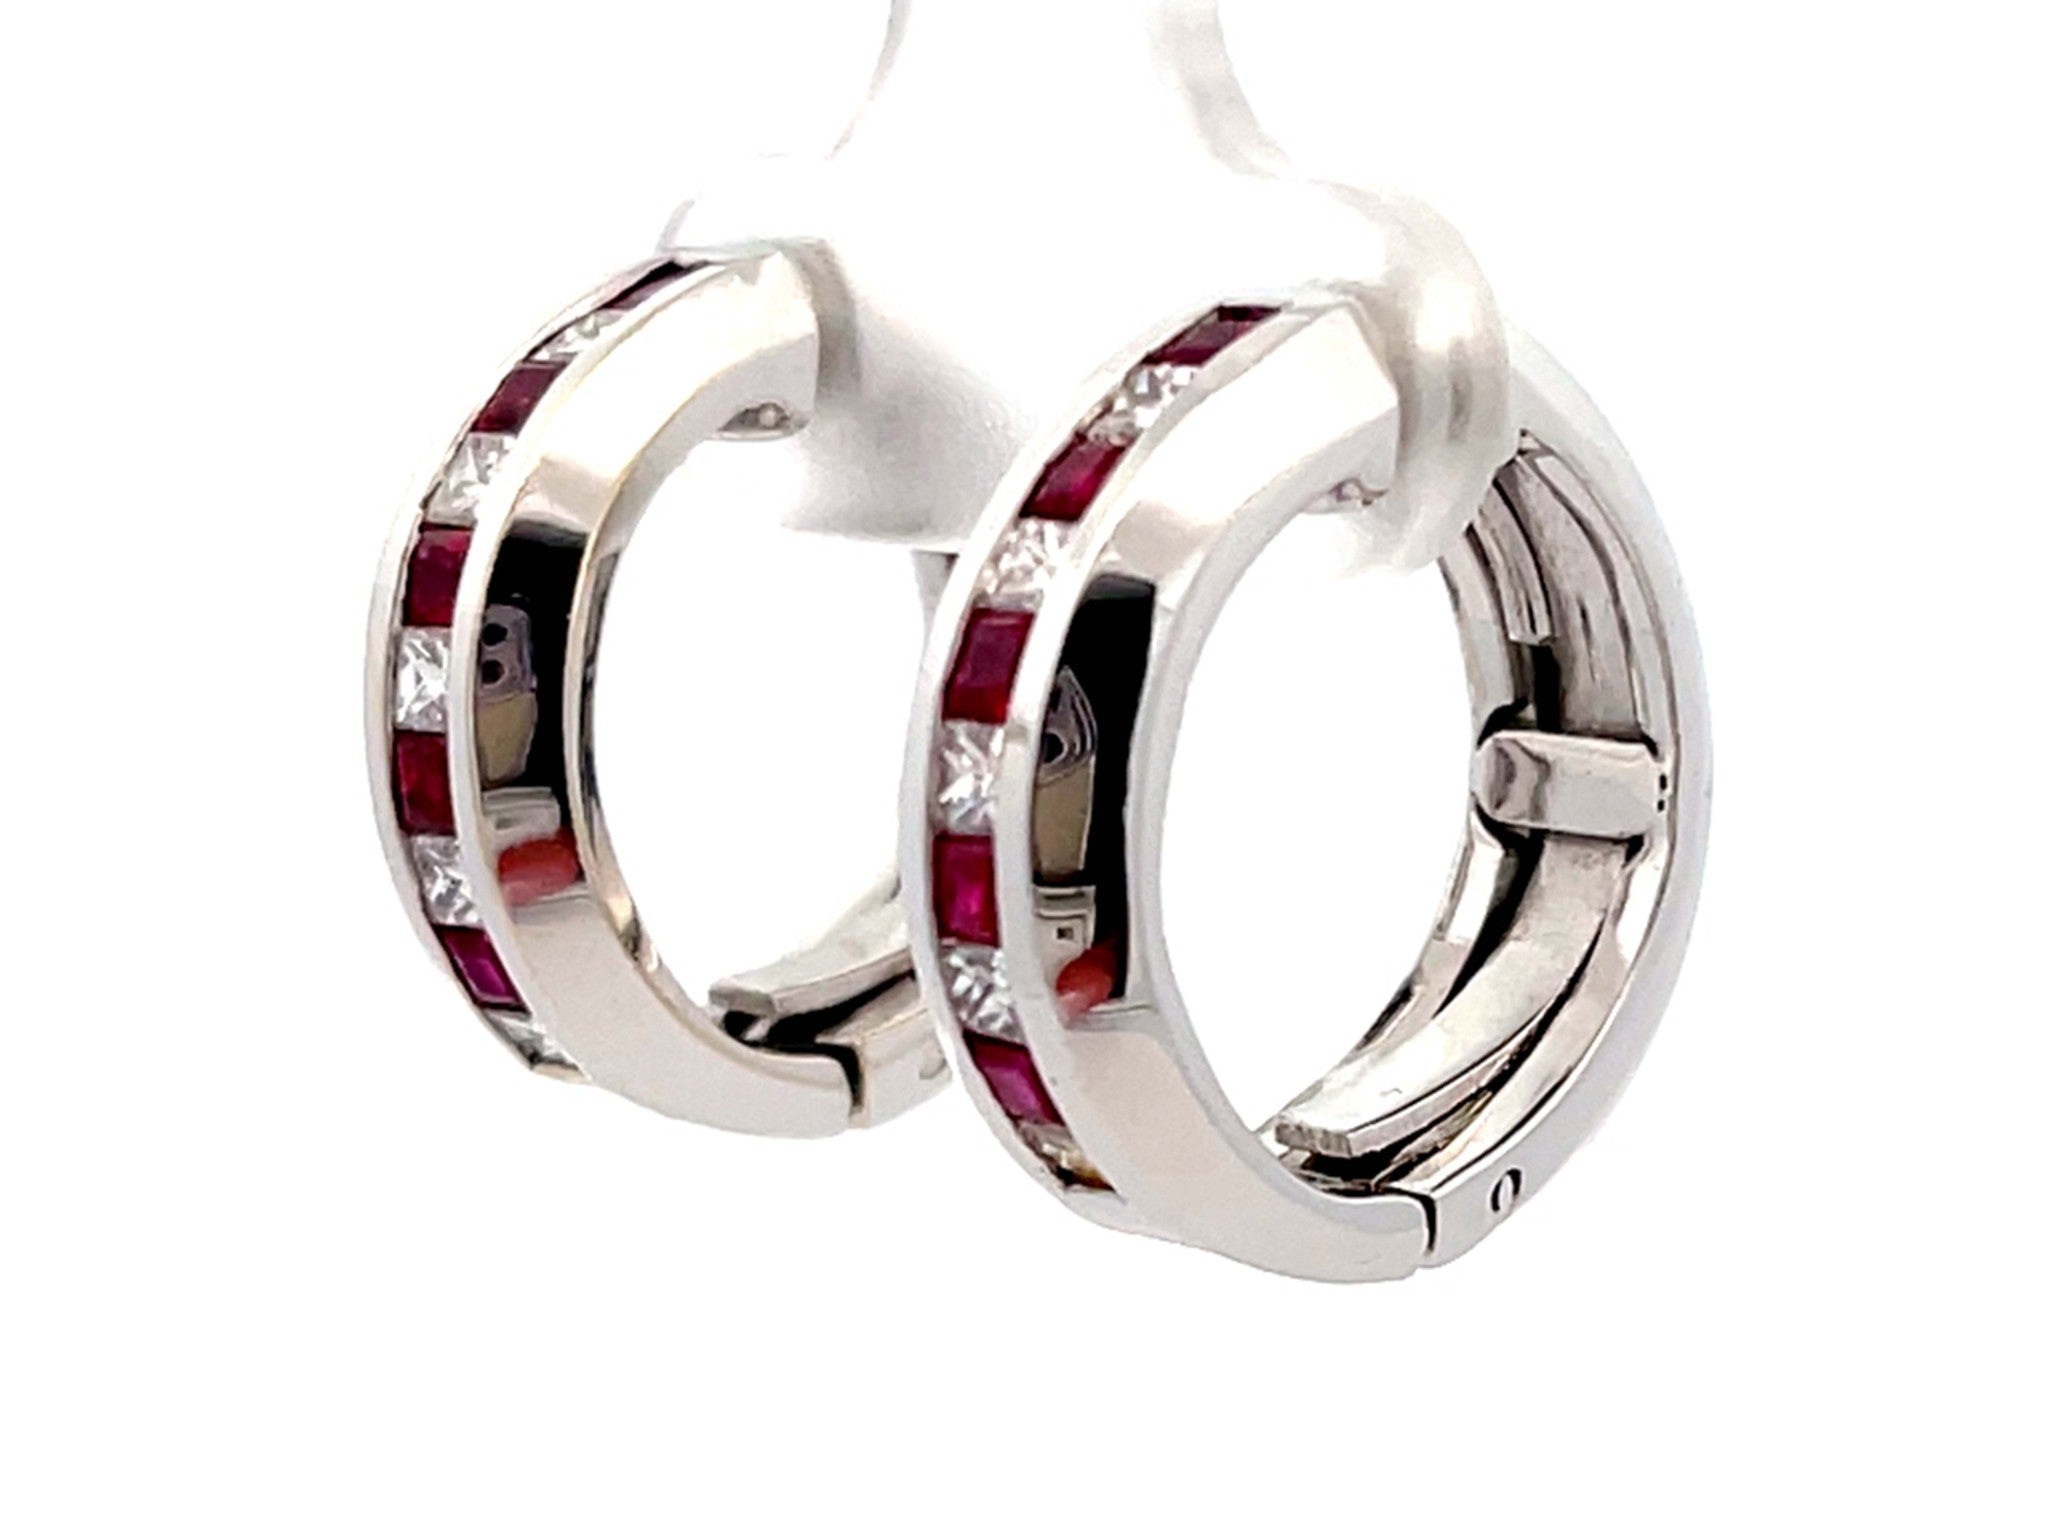 Channel Set Ruby and Diamond Hoop Earrings 18k White Gold